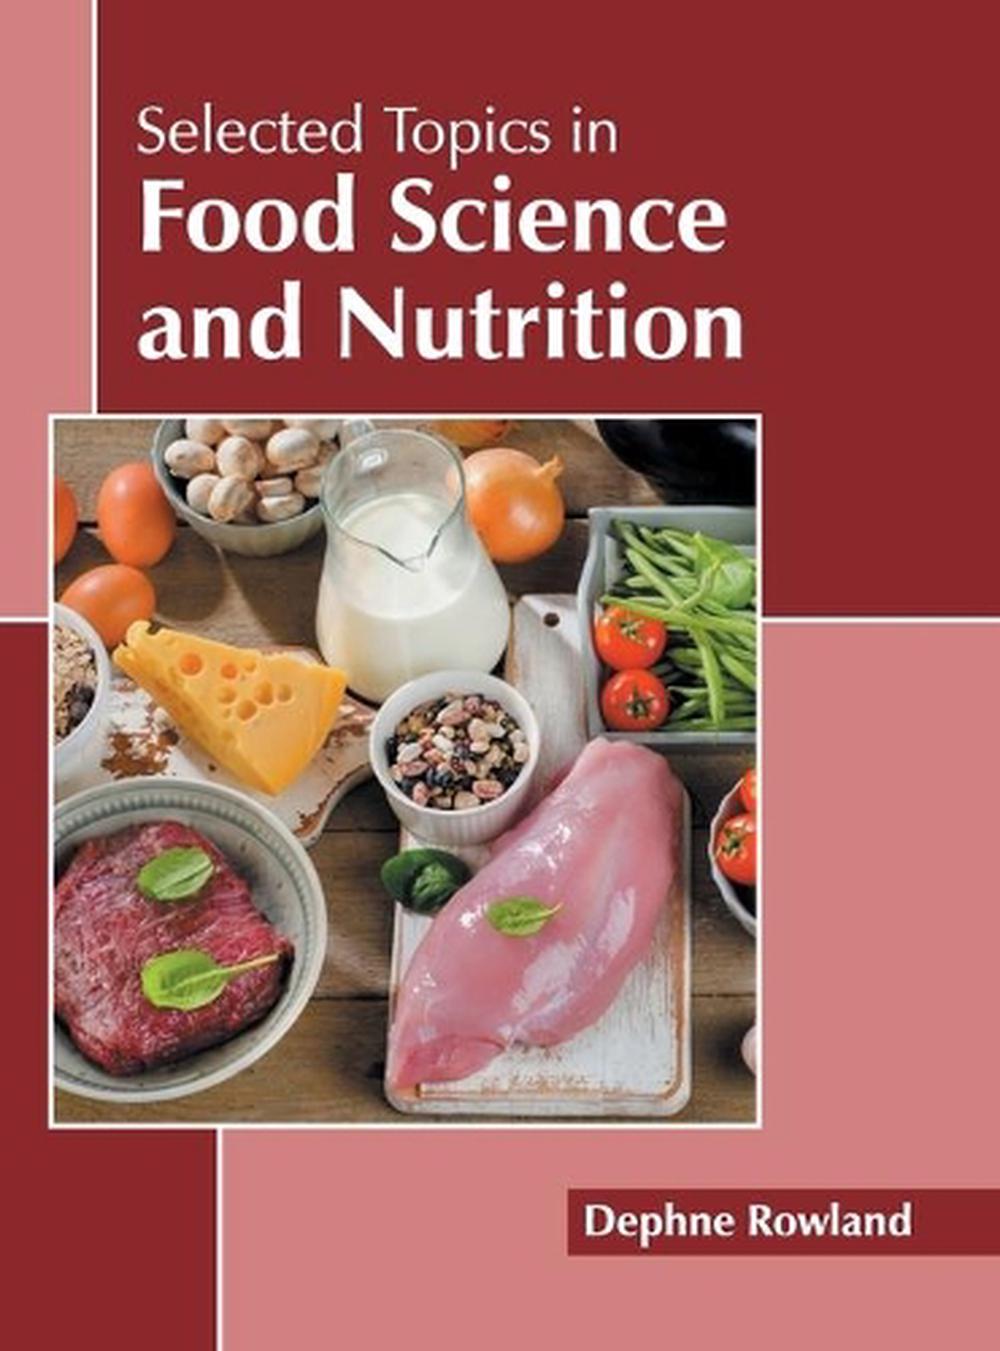 food science dissertation